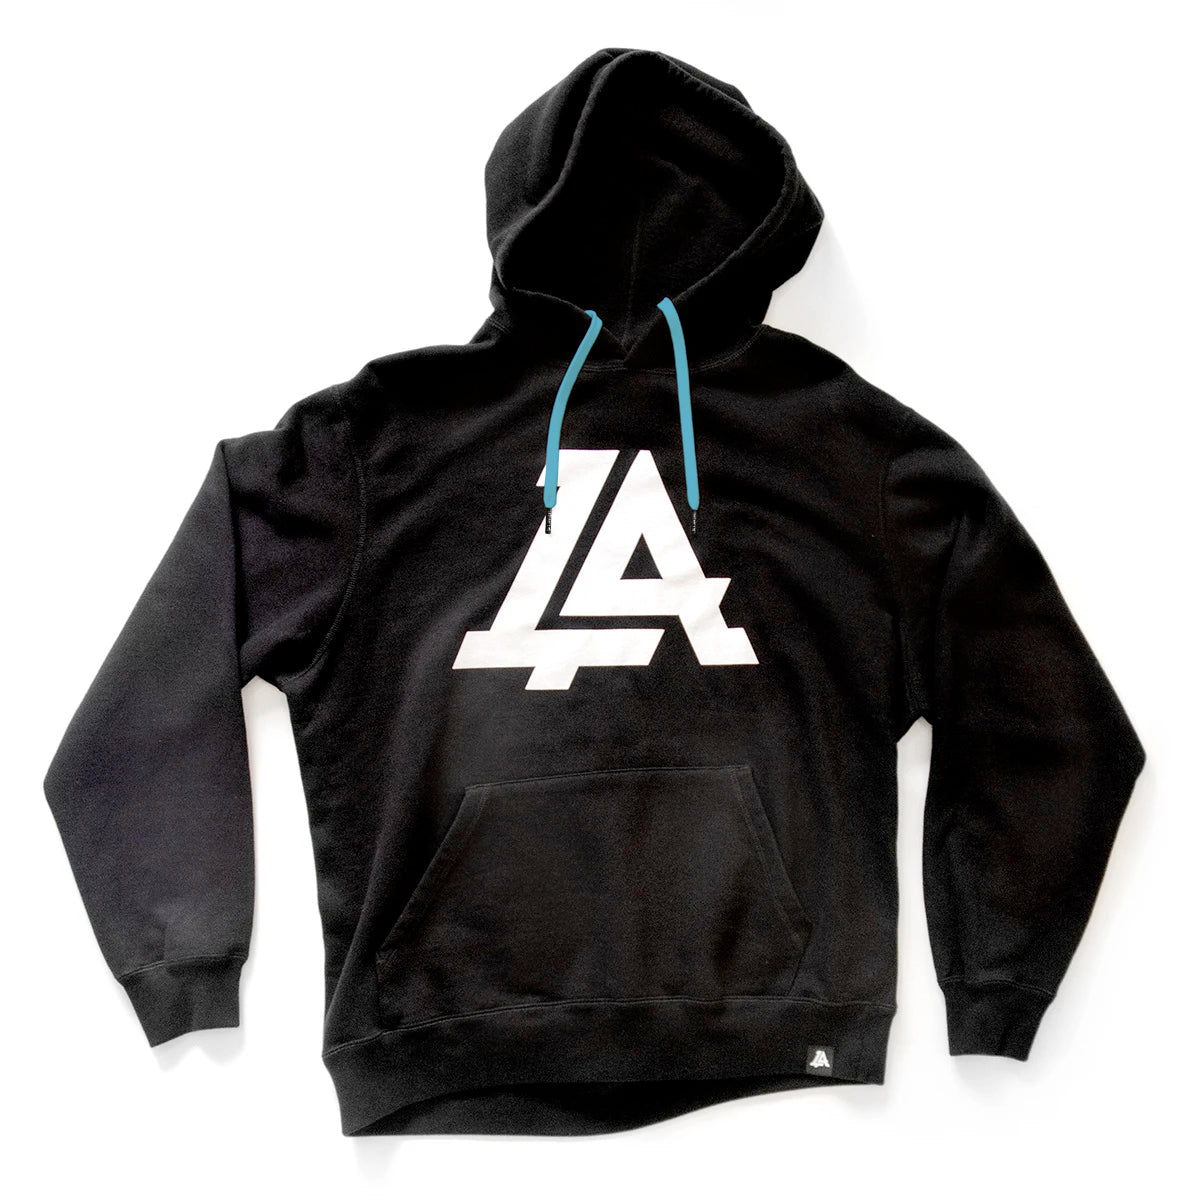 Lost Art Canada - black icon hoodie sweatshirt front view blue strings